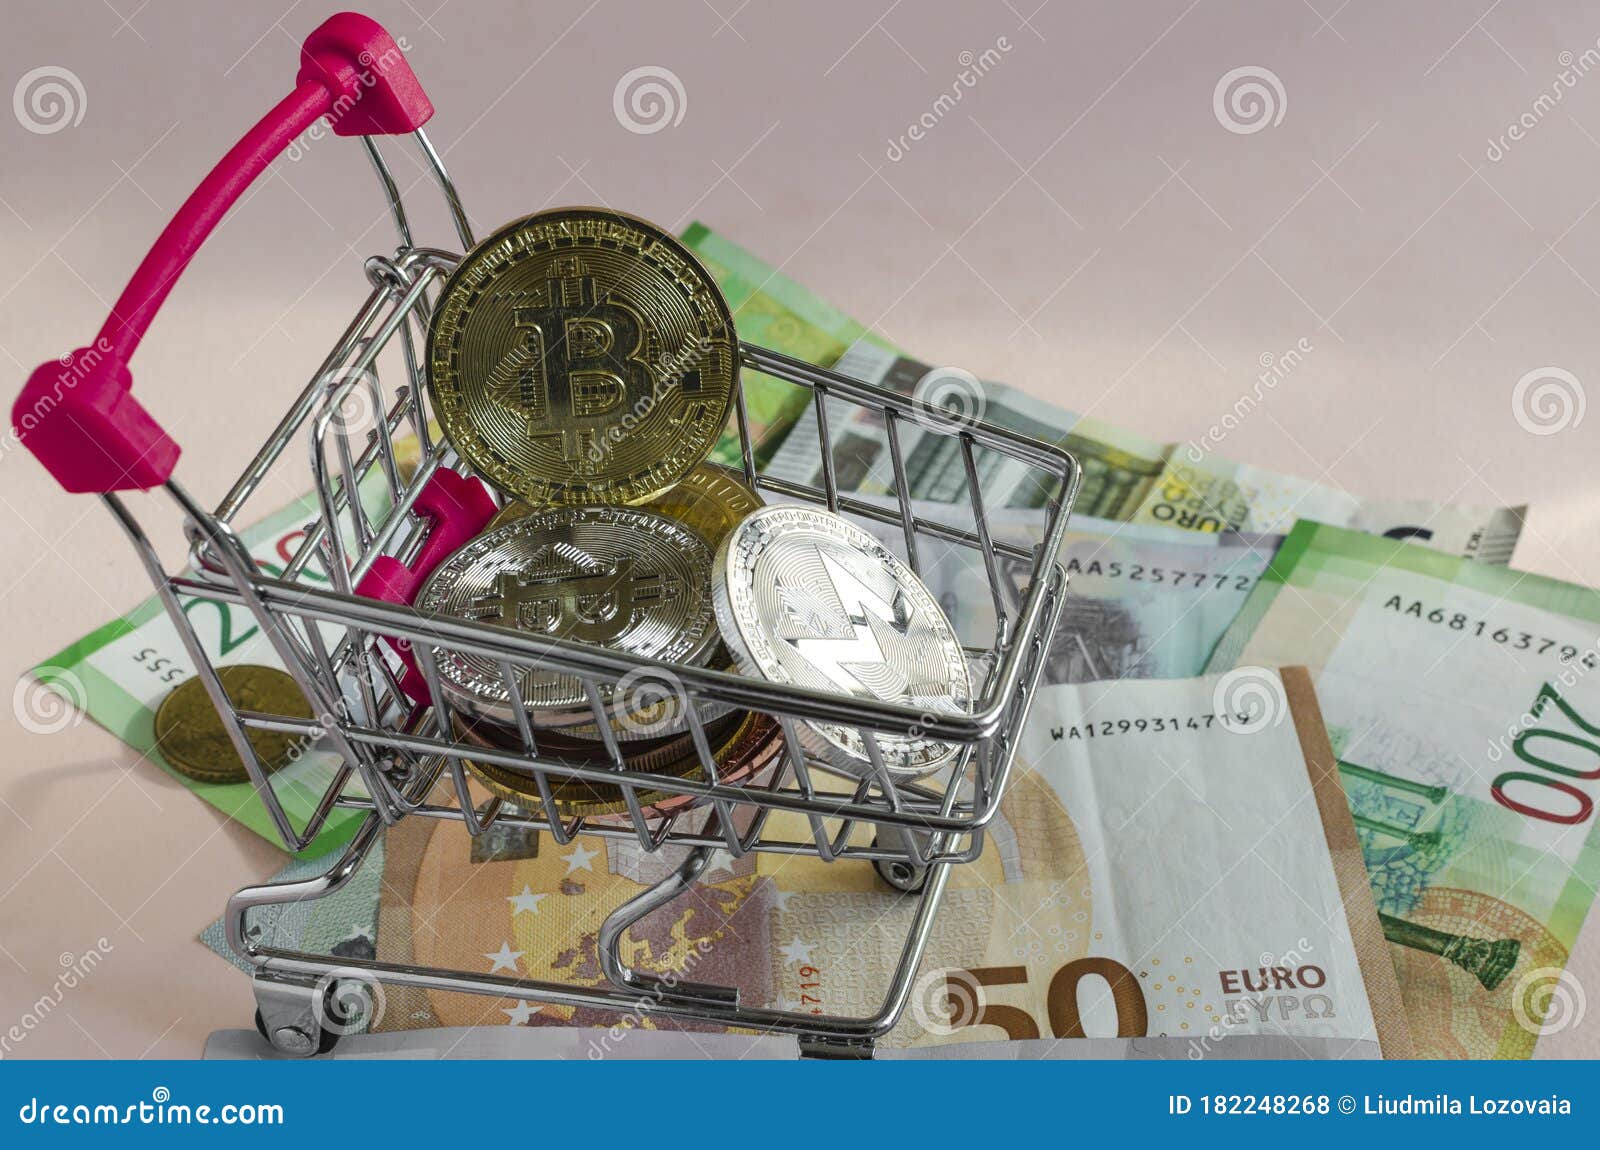 bitcoin money supermarket)